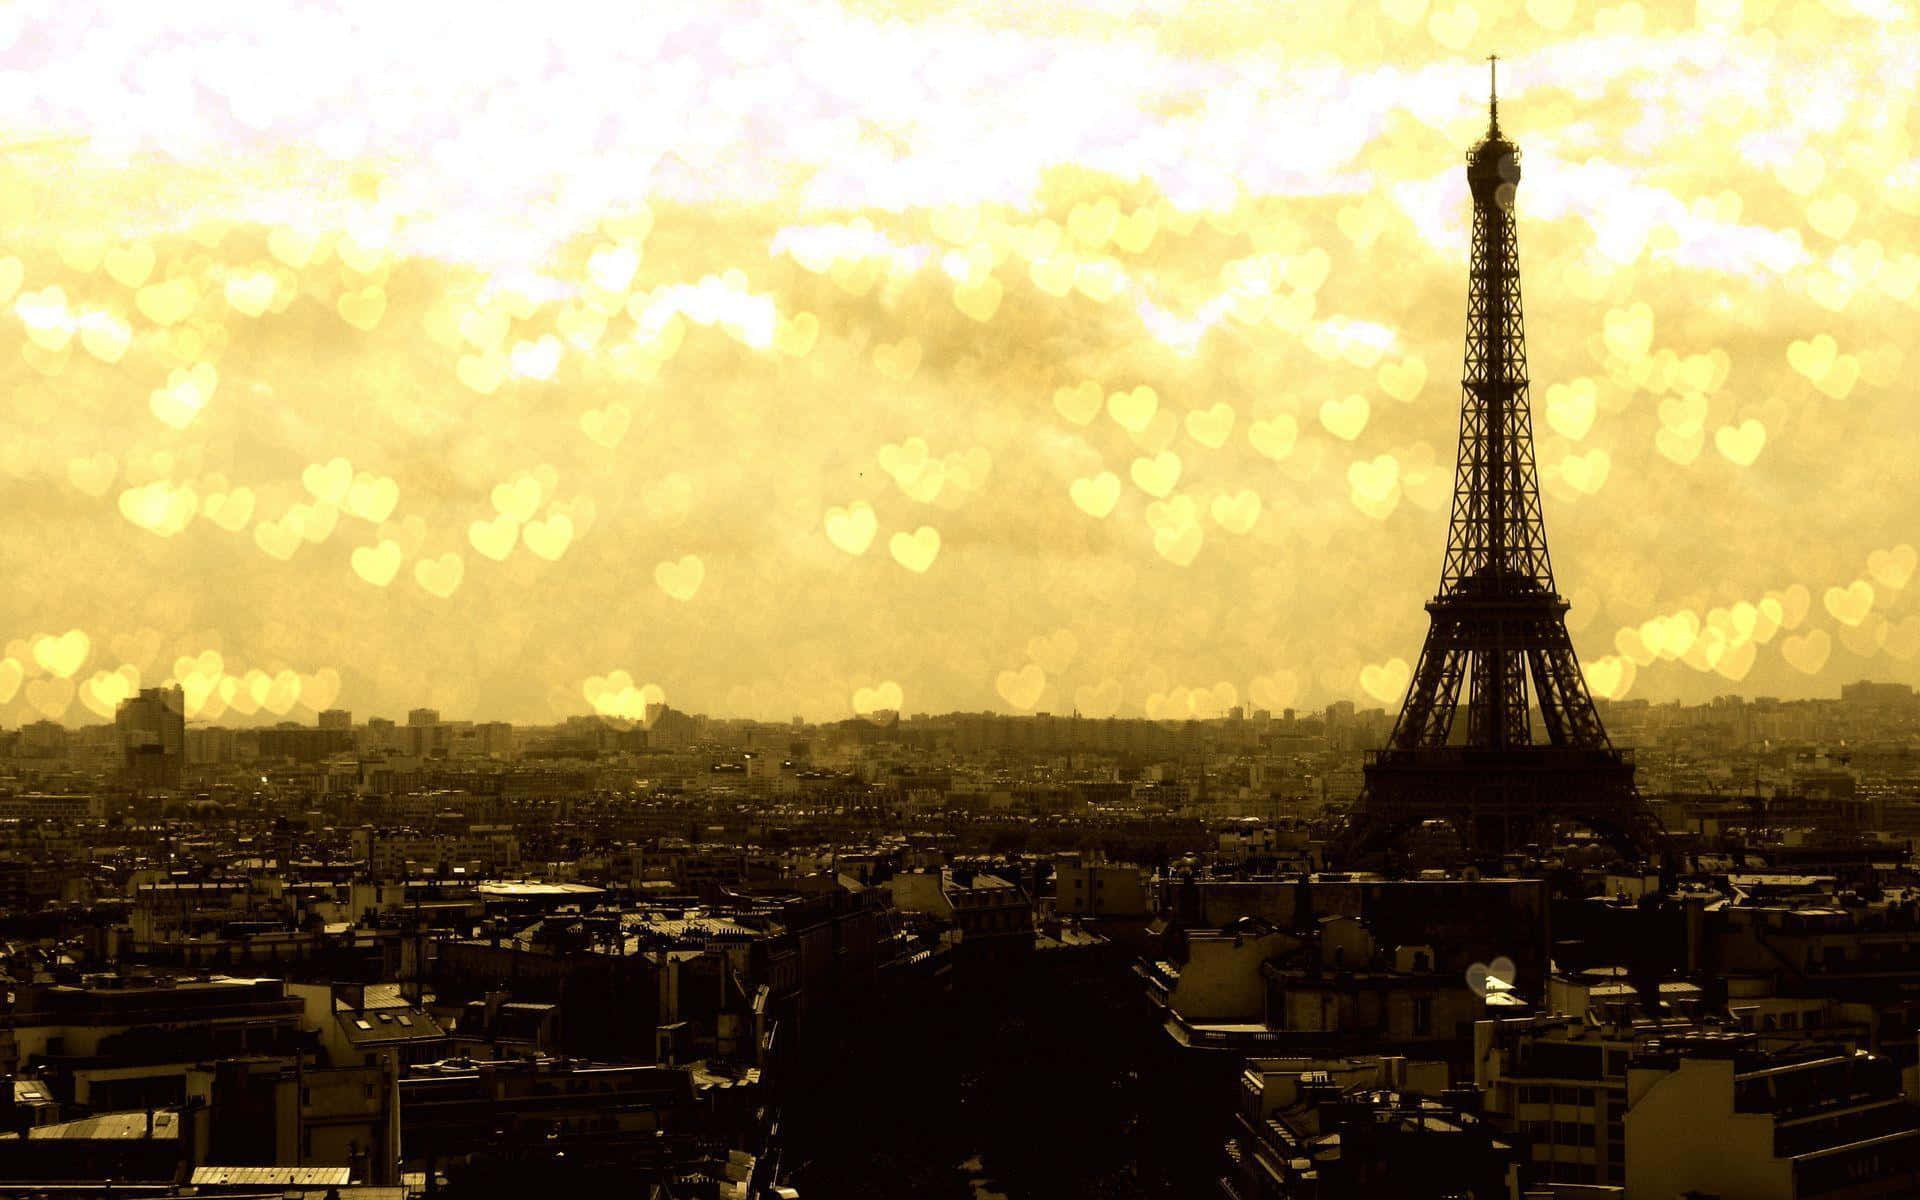 Illuminerernatten I Paris Er Den Ikoniske Eiffeltårn.